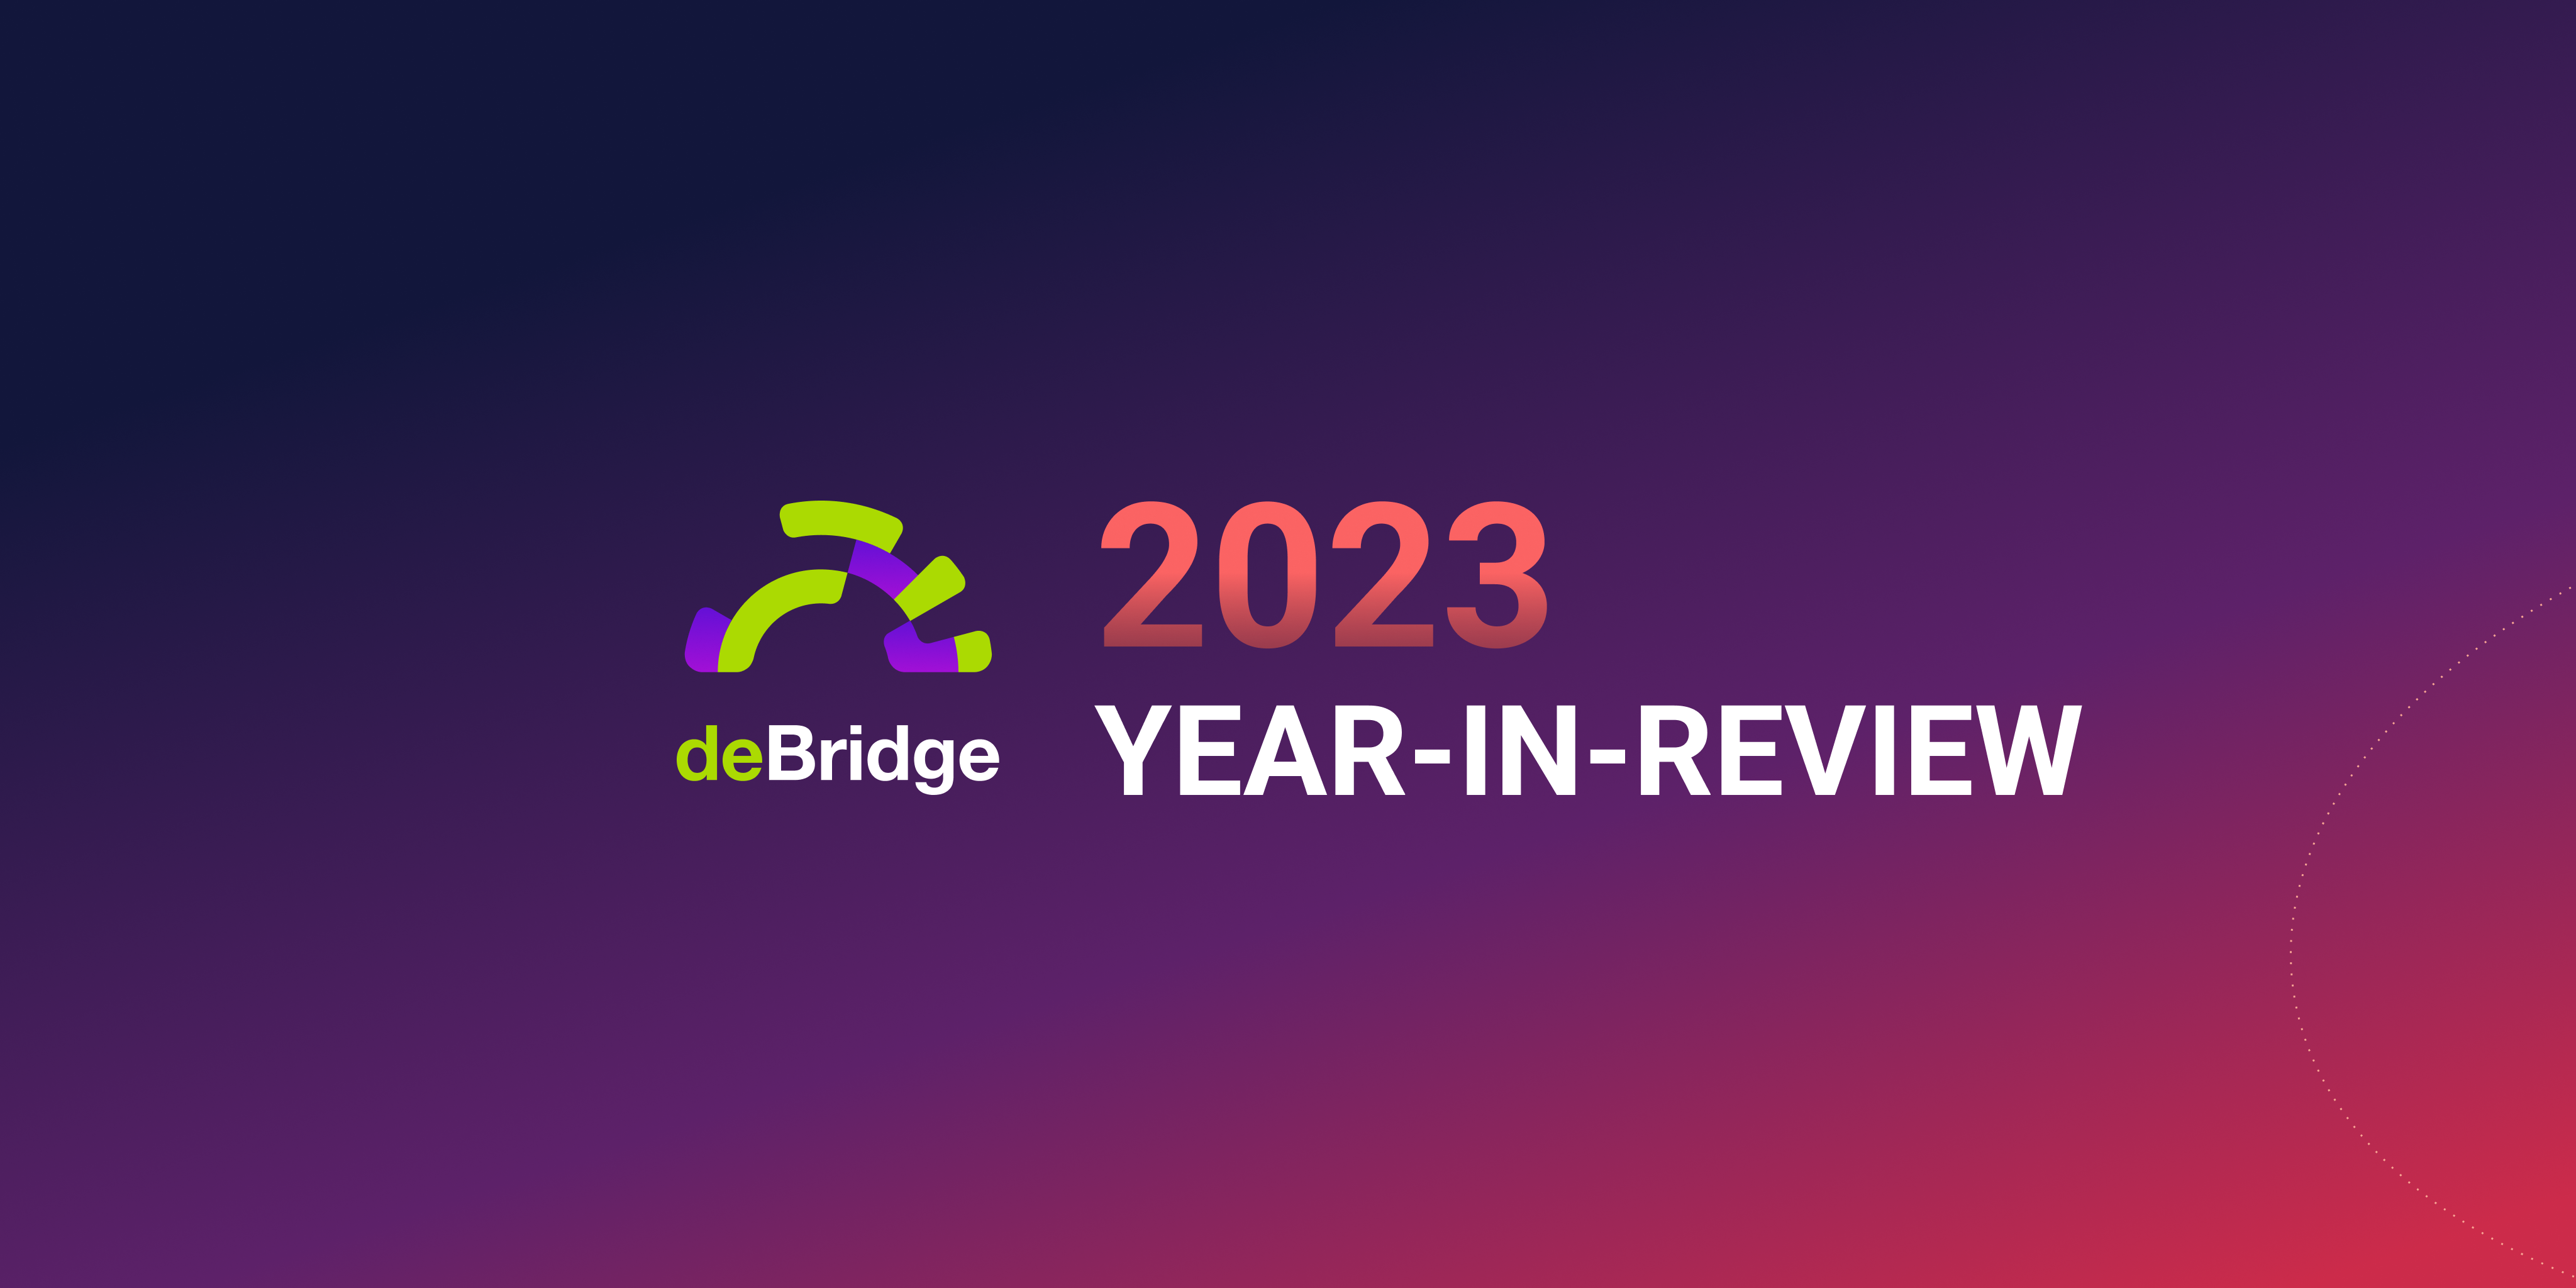 deBridge Year in Review 2023